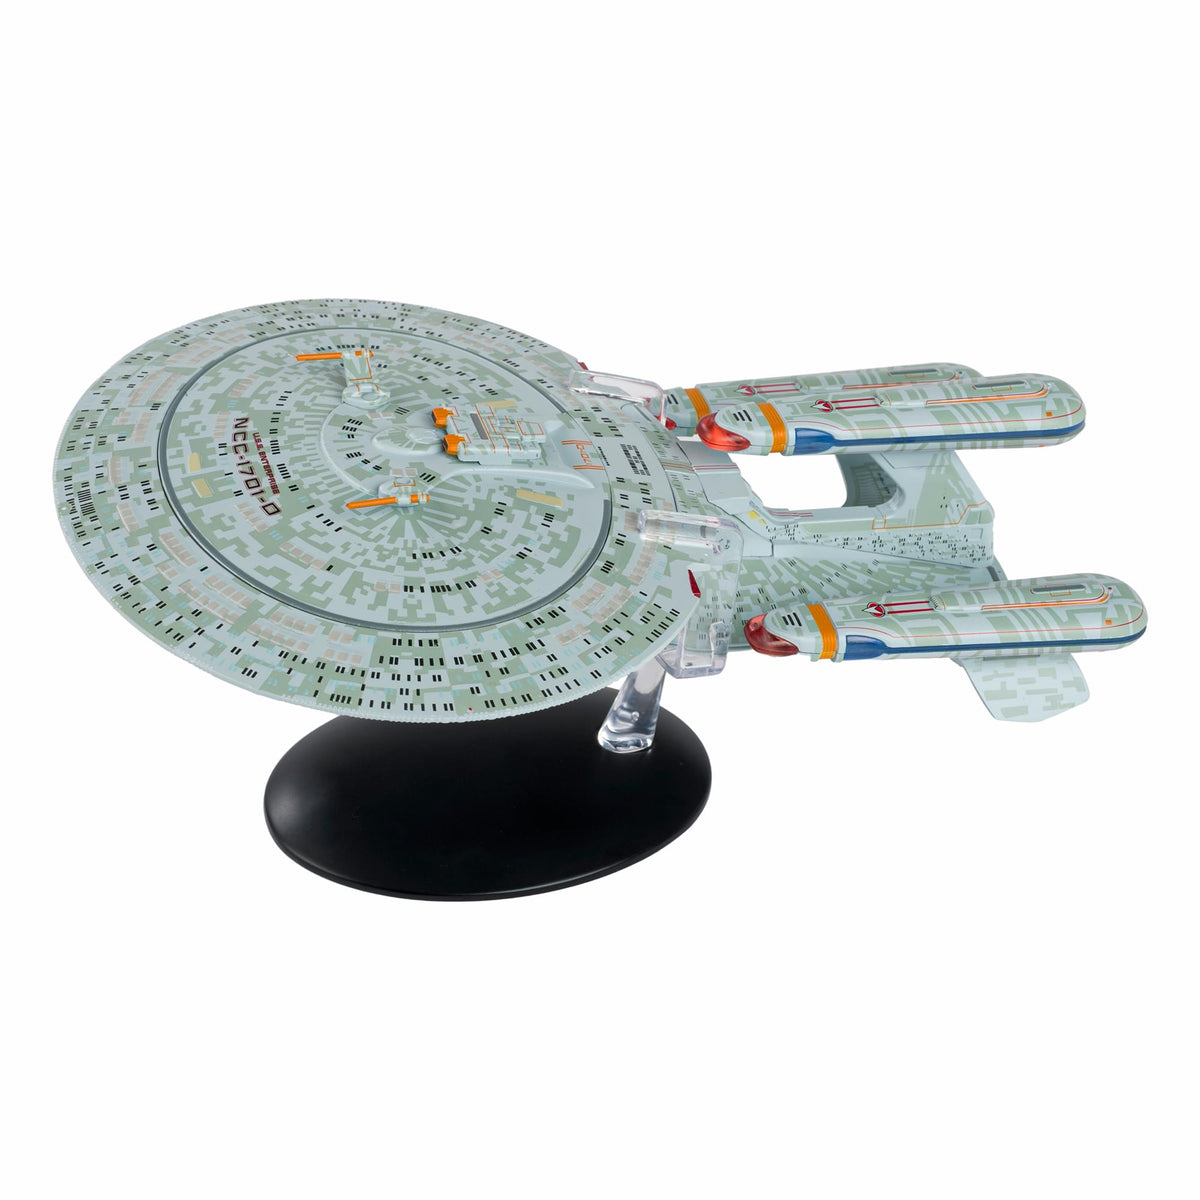 Star Trek Starship Replica | Dreadnought | Free Shipping